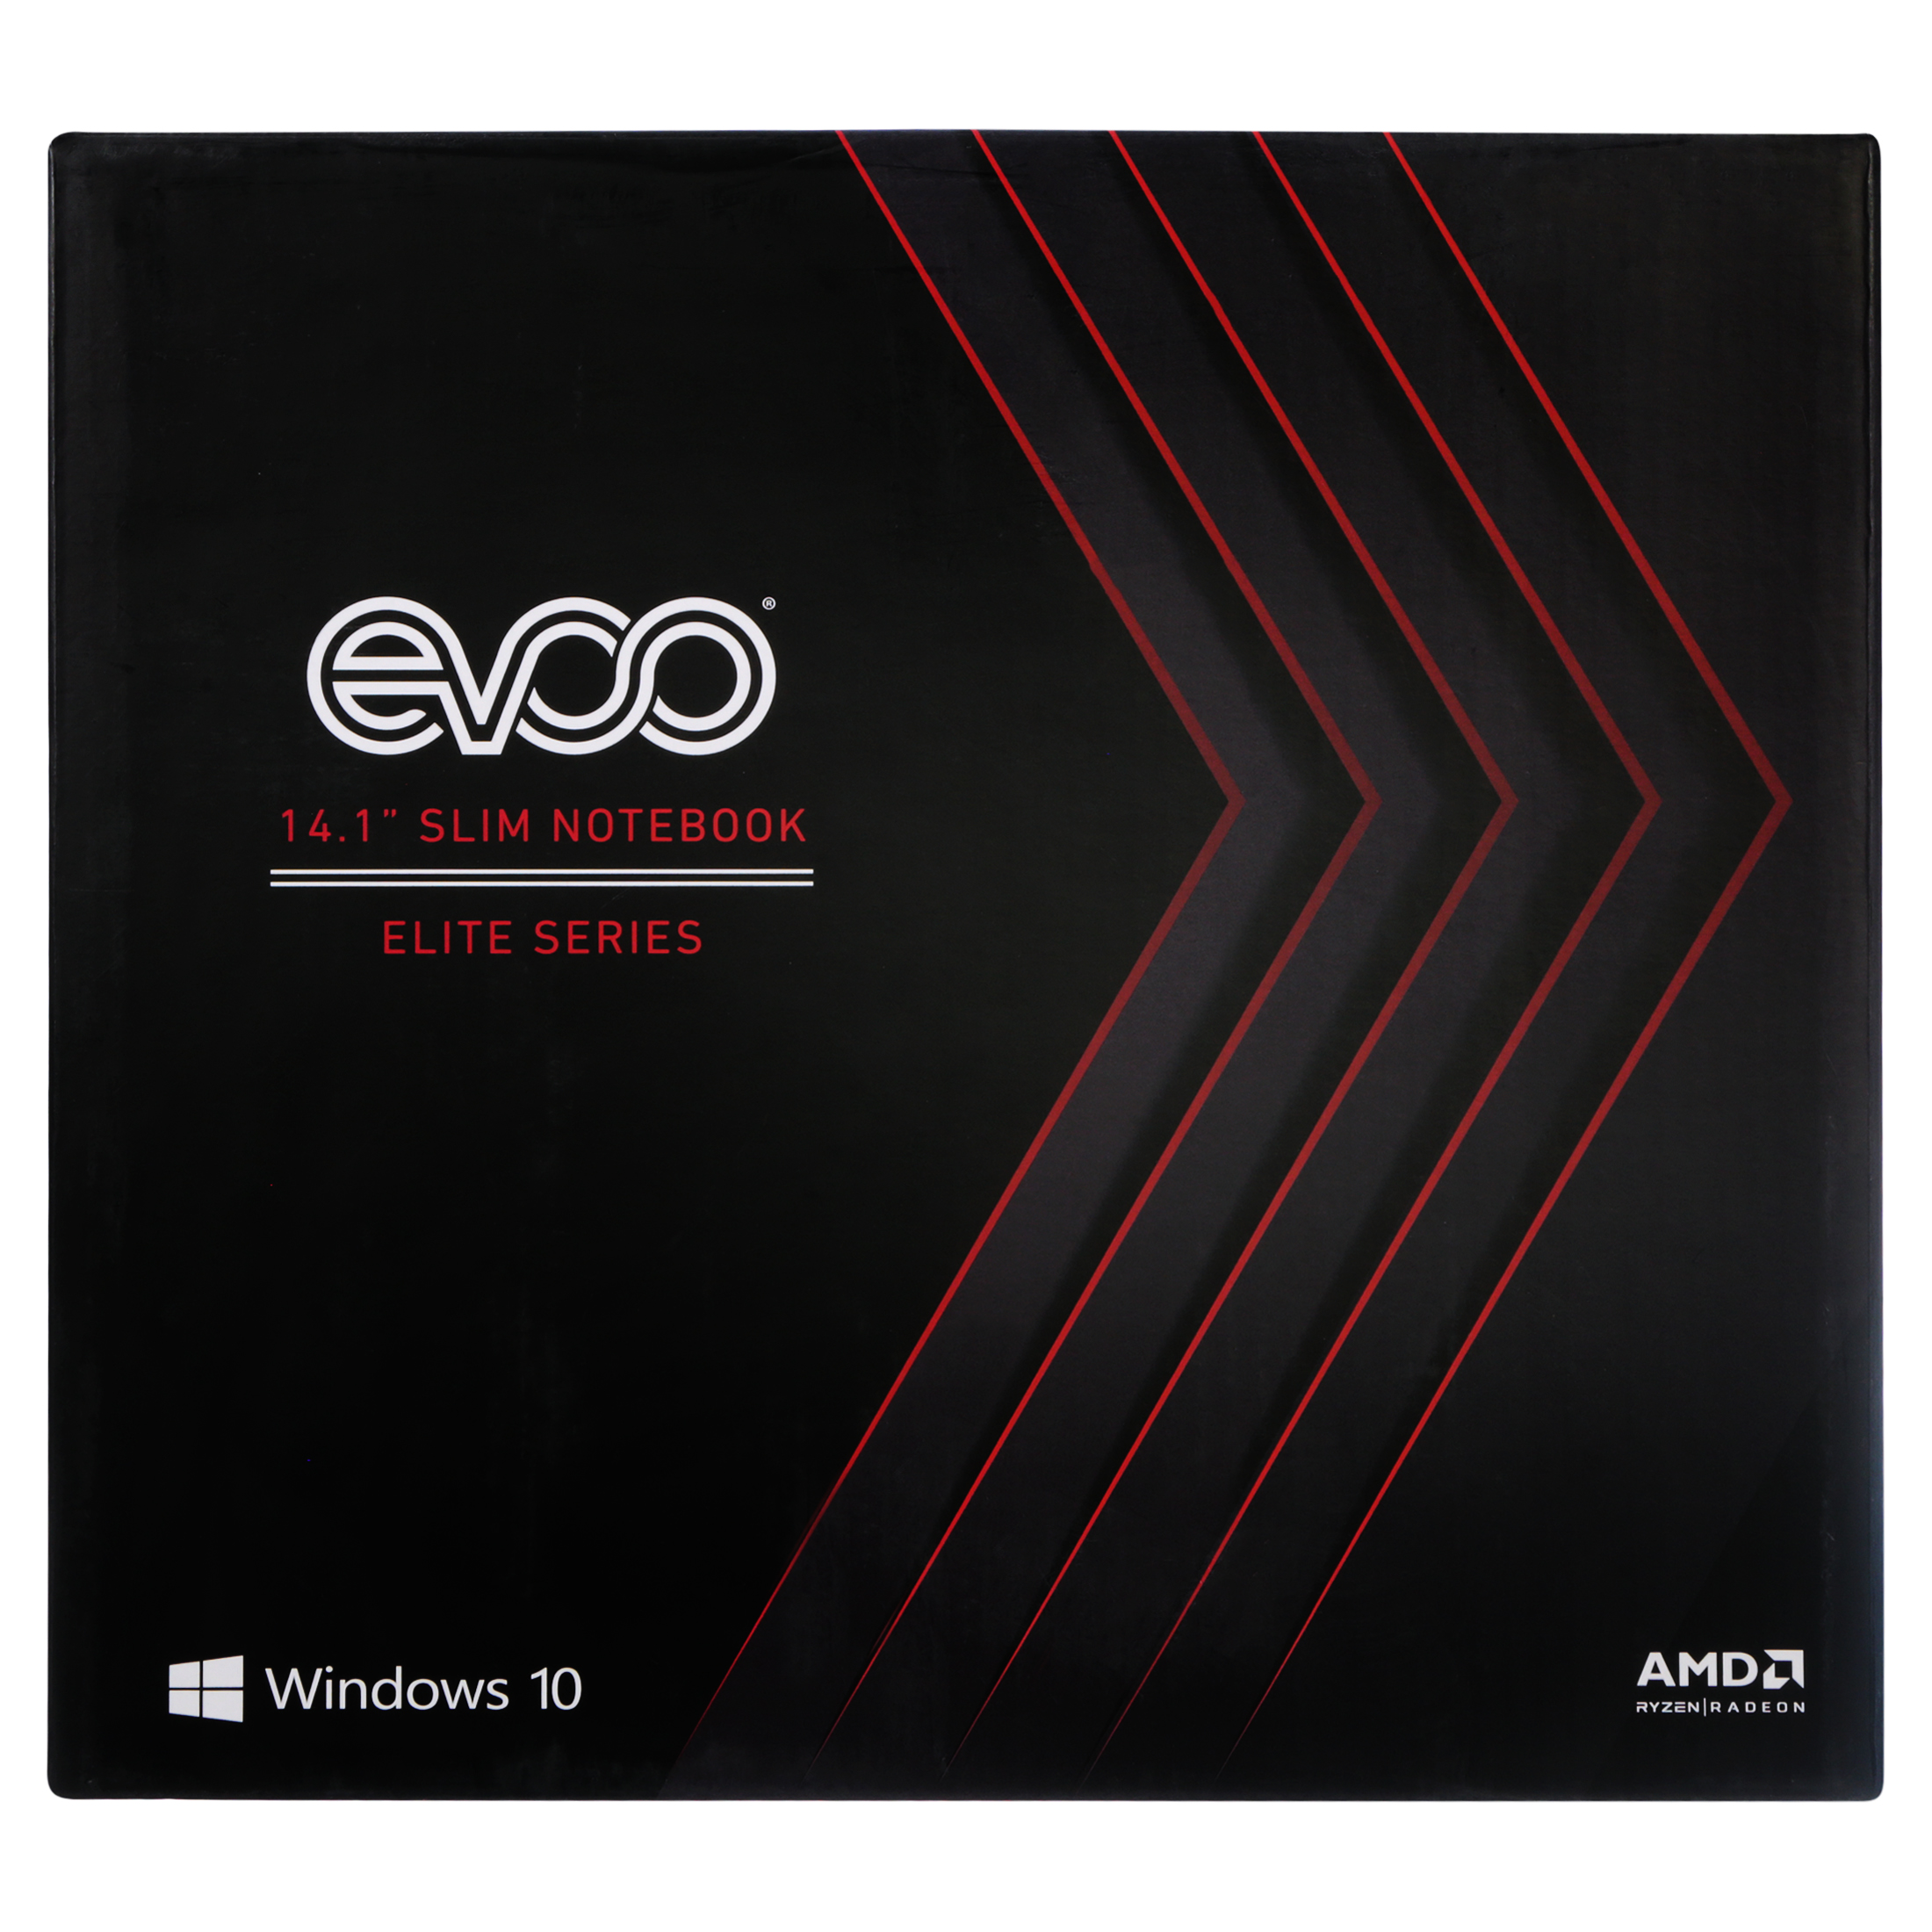 EVOO 14.1” Ultra Slim Notebook - Elite Series, FHD Display, AMD Ryzen 5 3500U Processor with Radeon Vega 8 Graphics, 8GB RAM, 256GB SSD, HD Webcam, Windows 10 Home, Silver - image 4 of 9